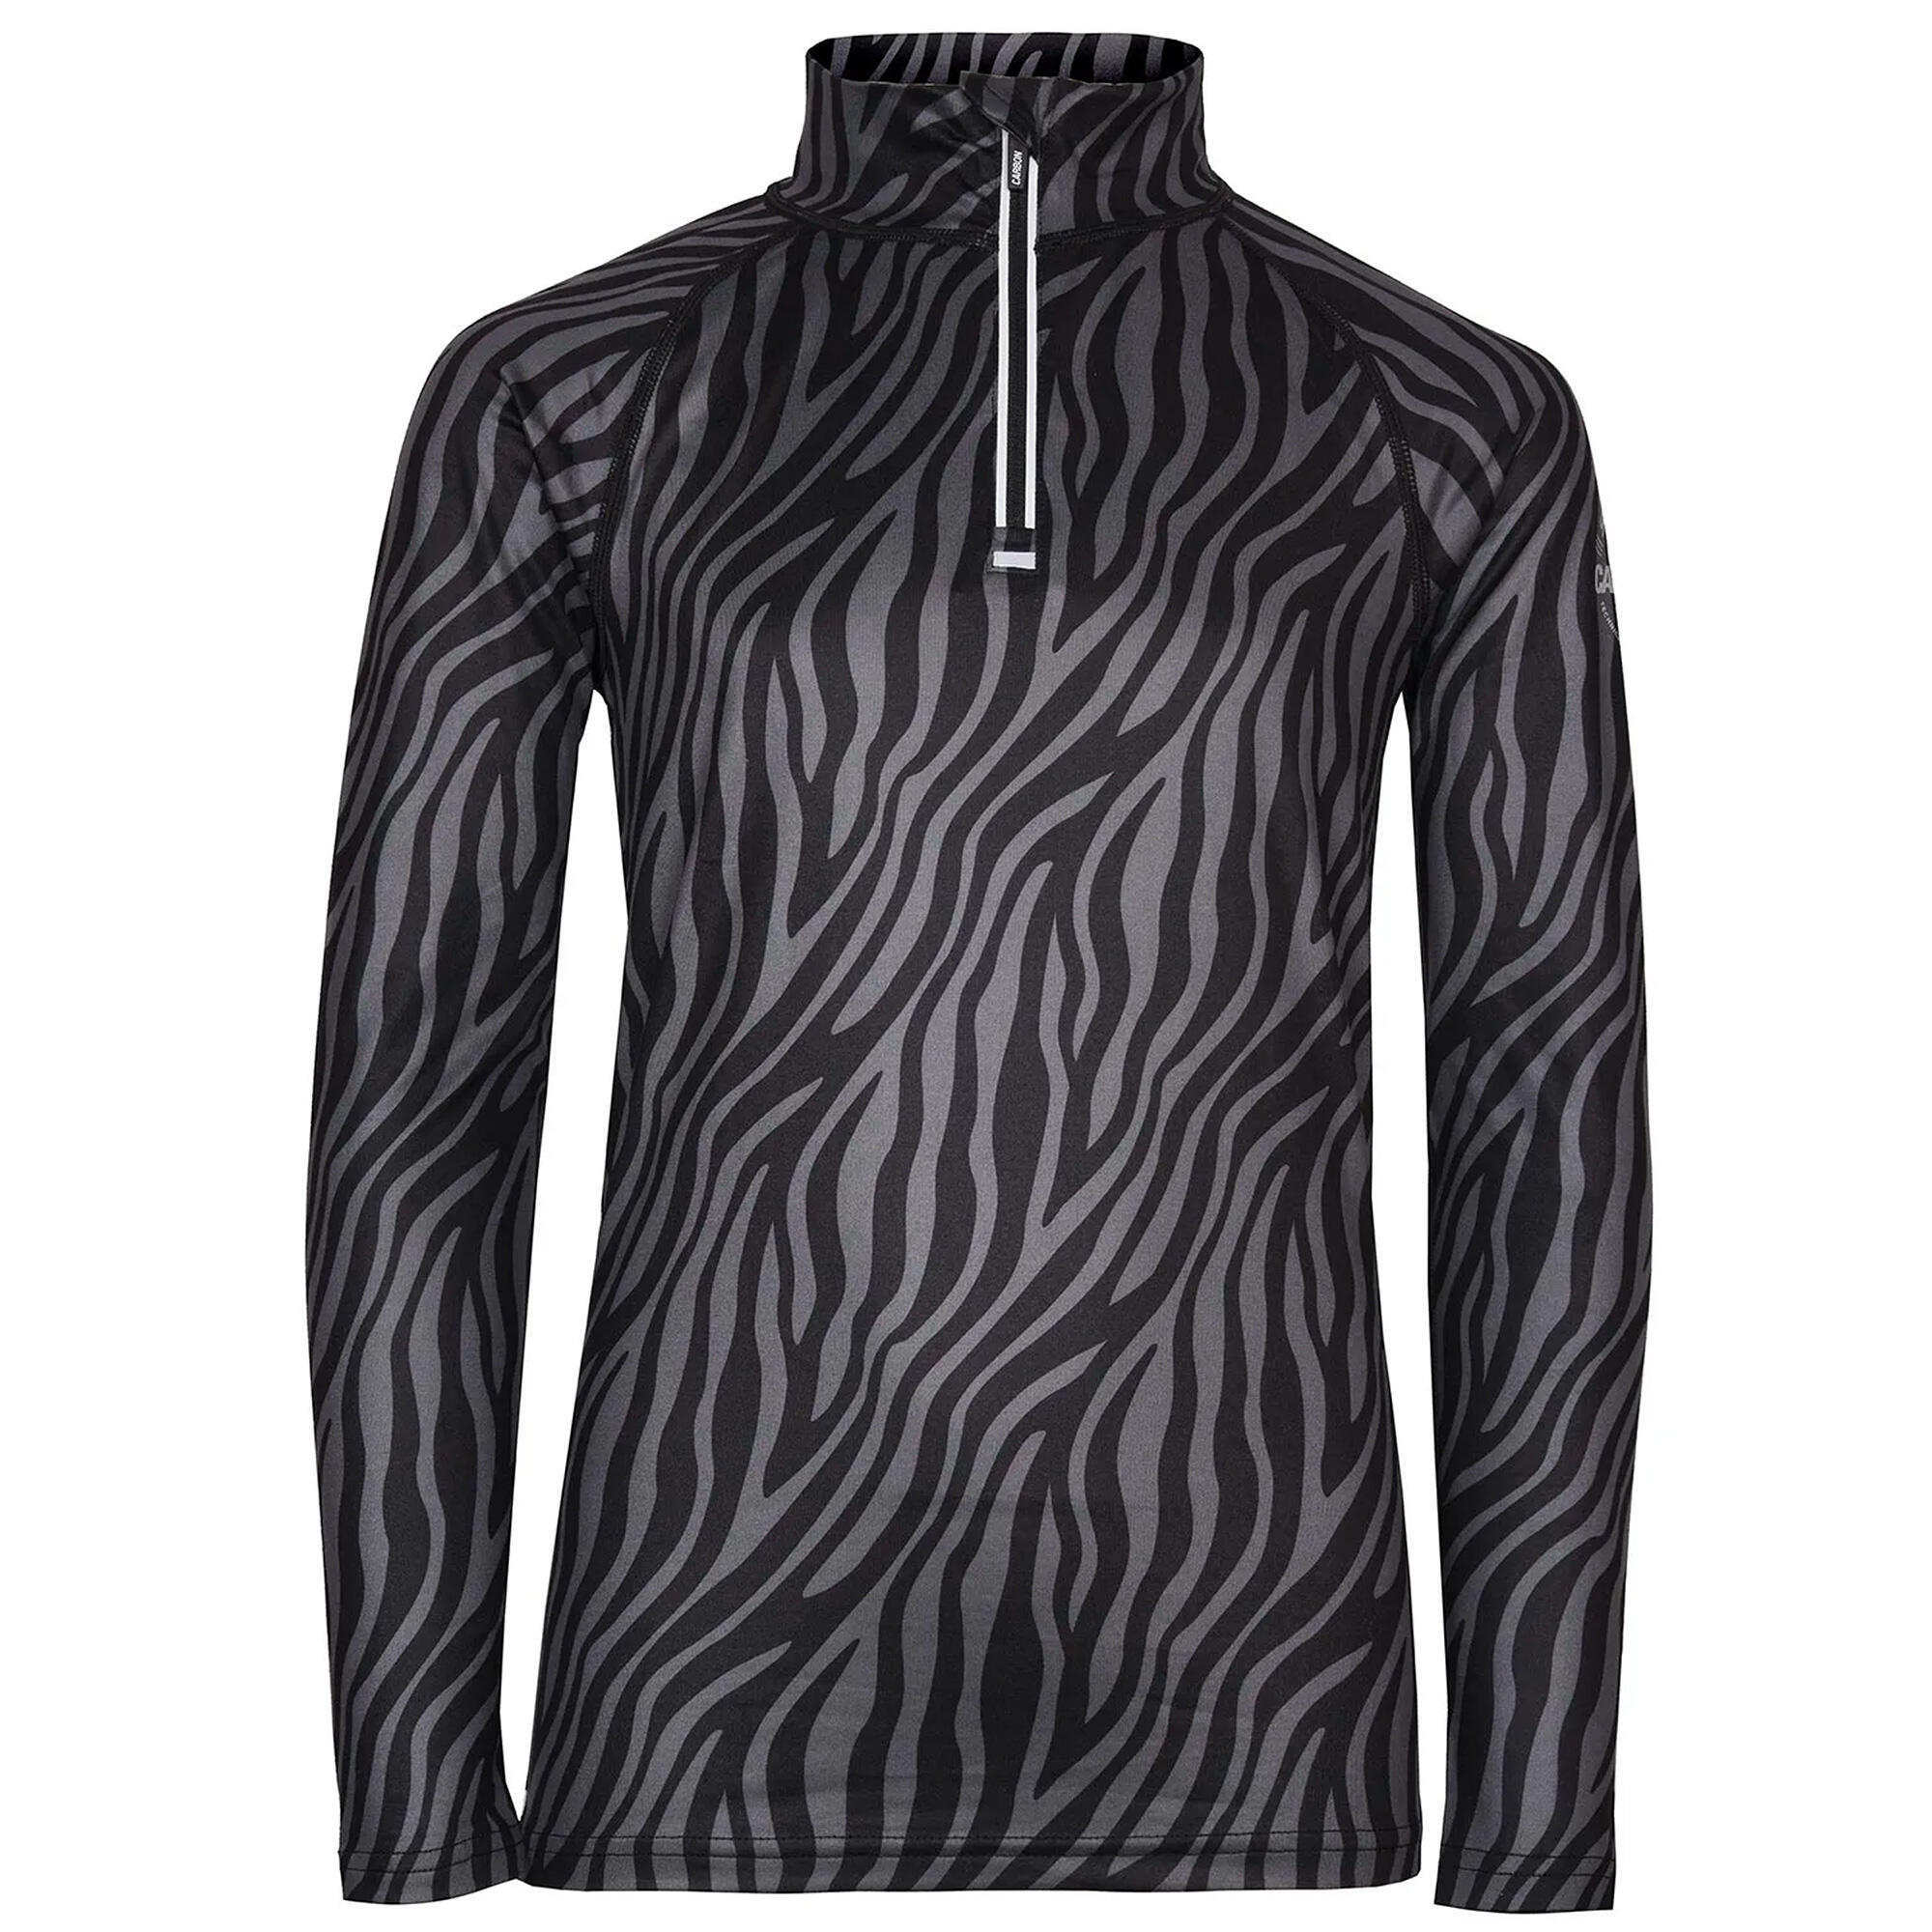 SURFANIC Cozy Limited Edition Zip Neck Black Zebra